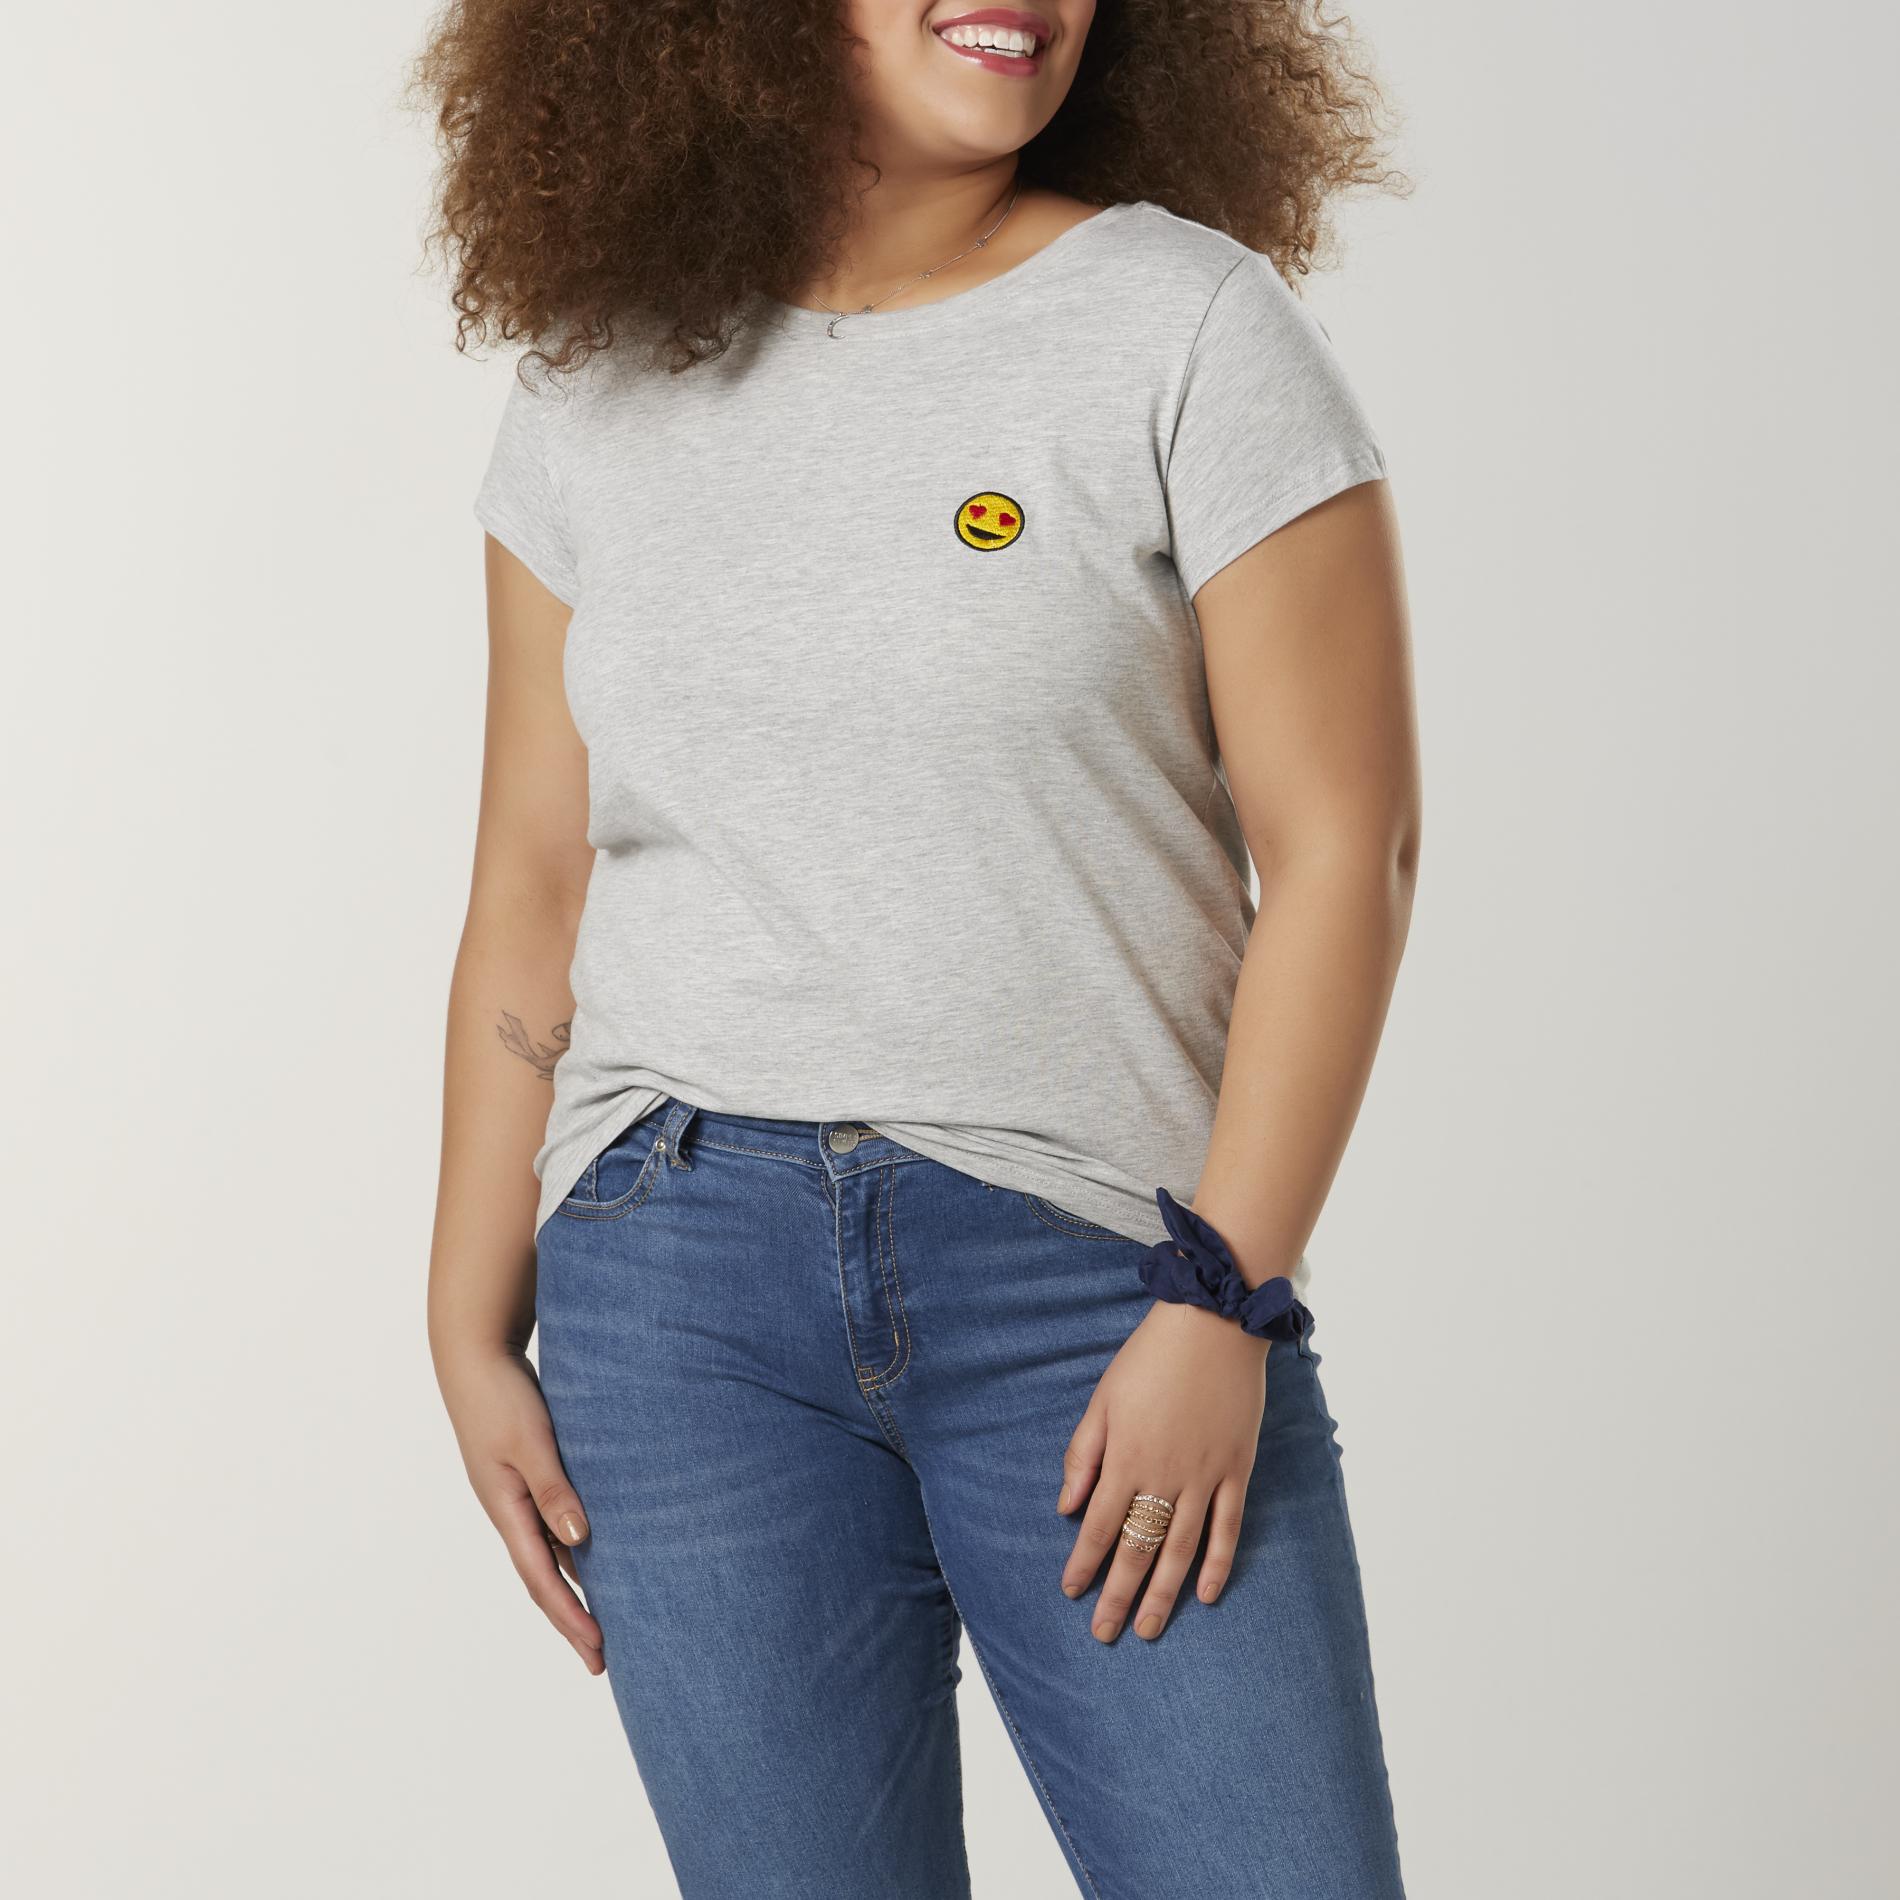 Joe Boxer Juniors' Plus Embroidered T-Shirt - Smiley